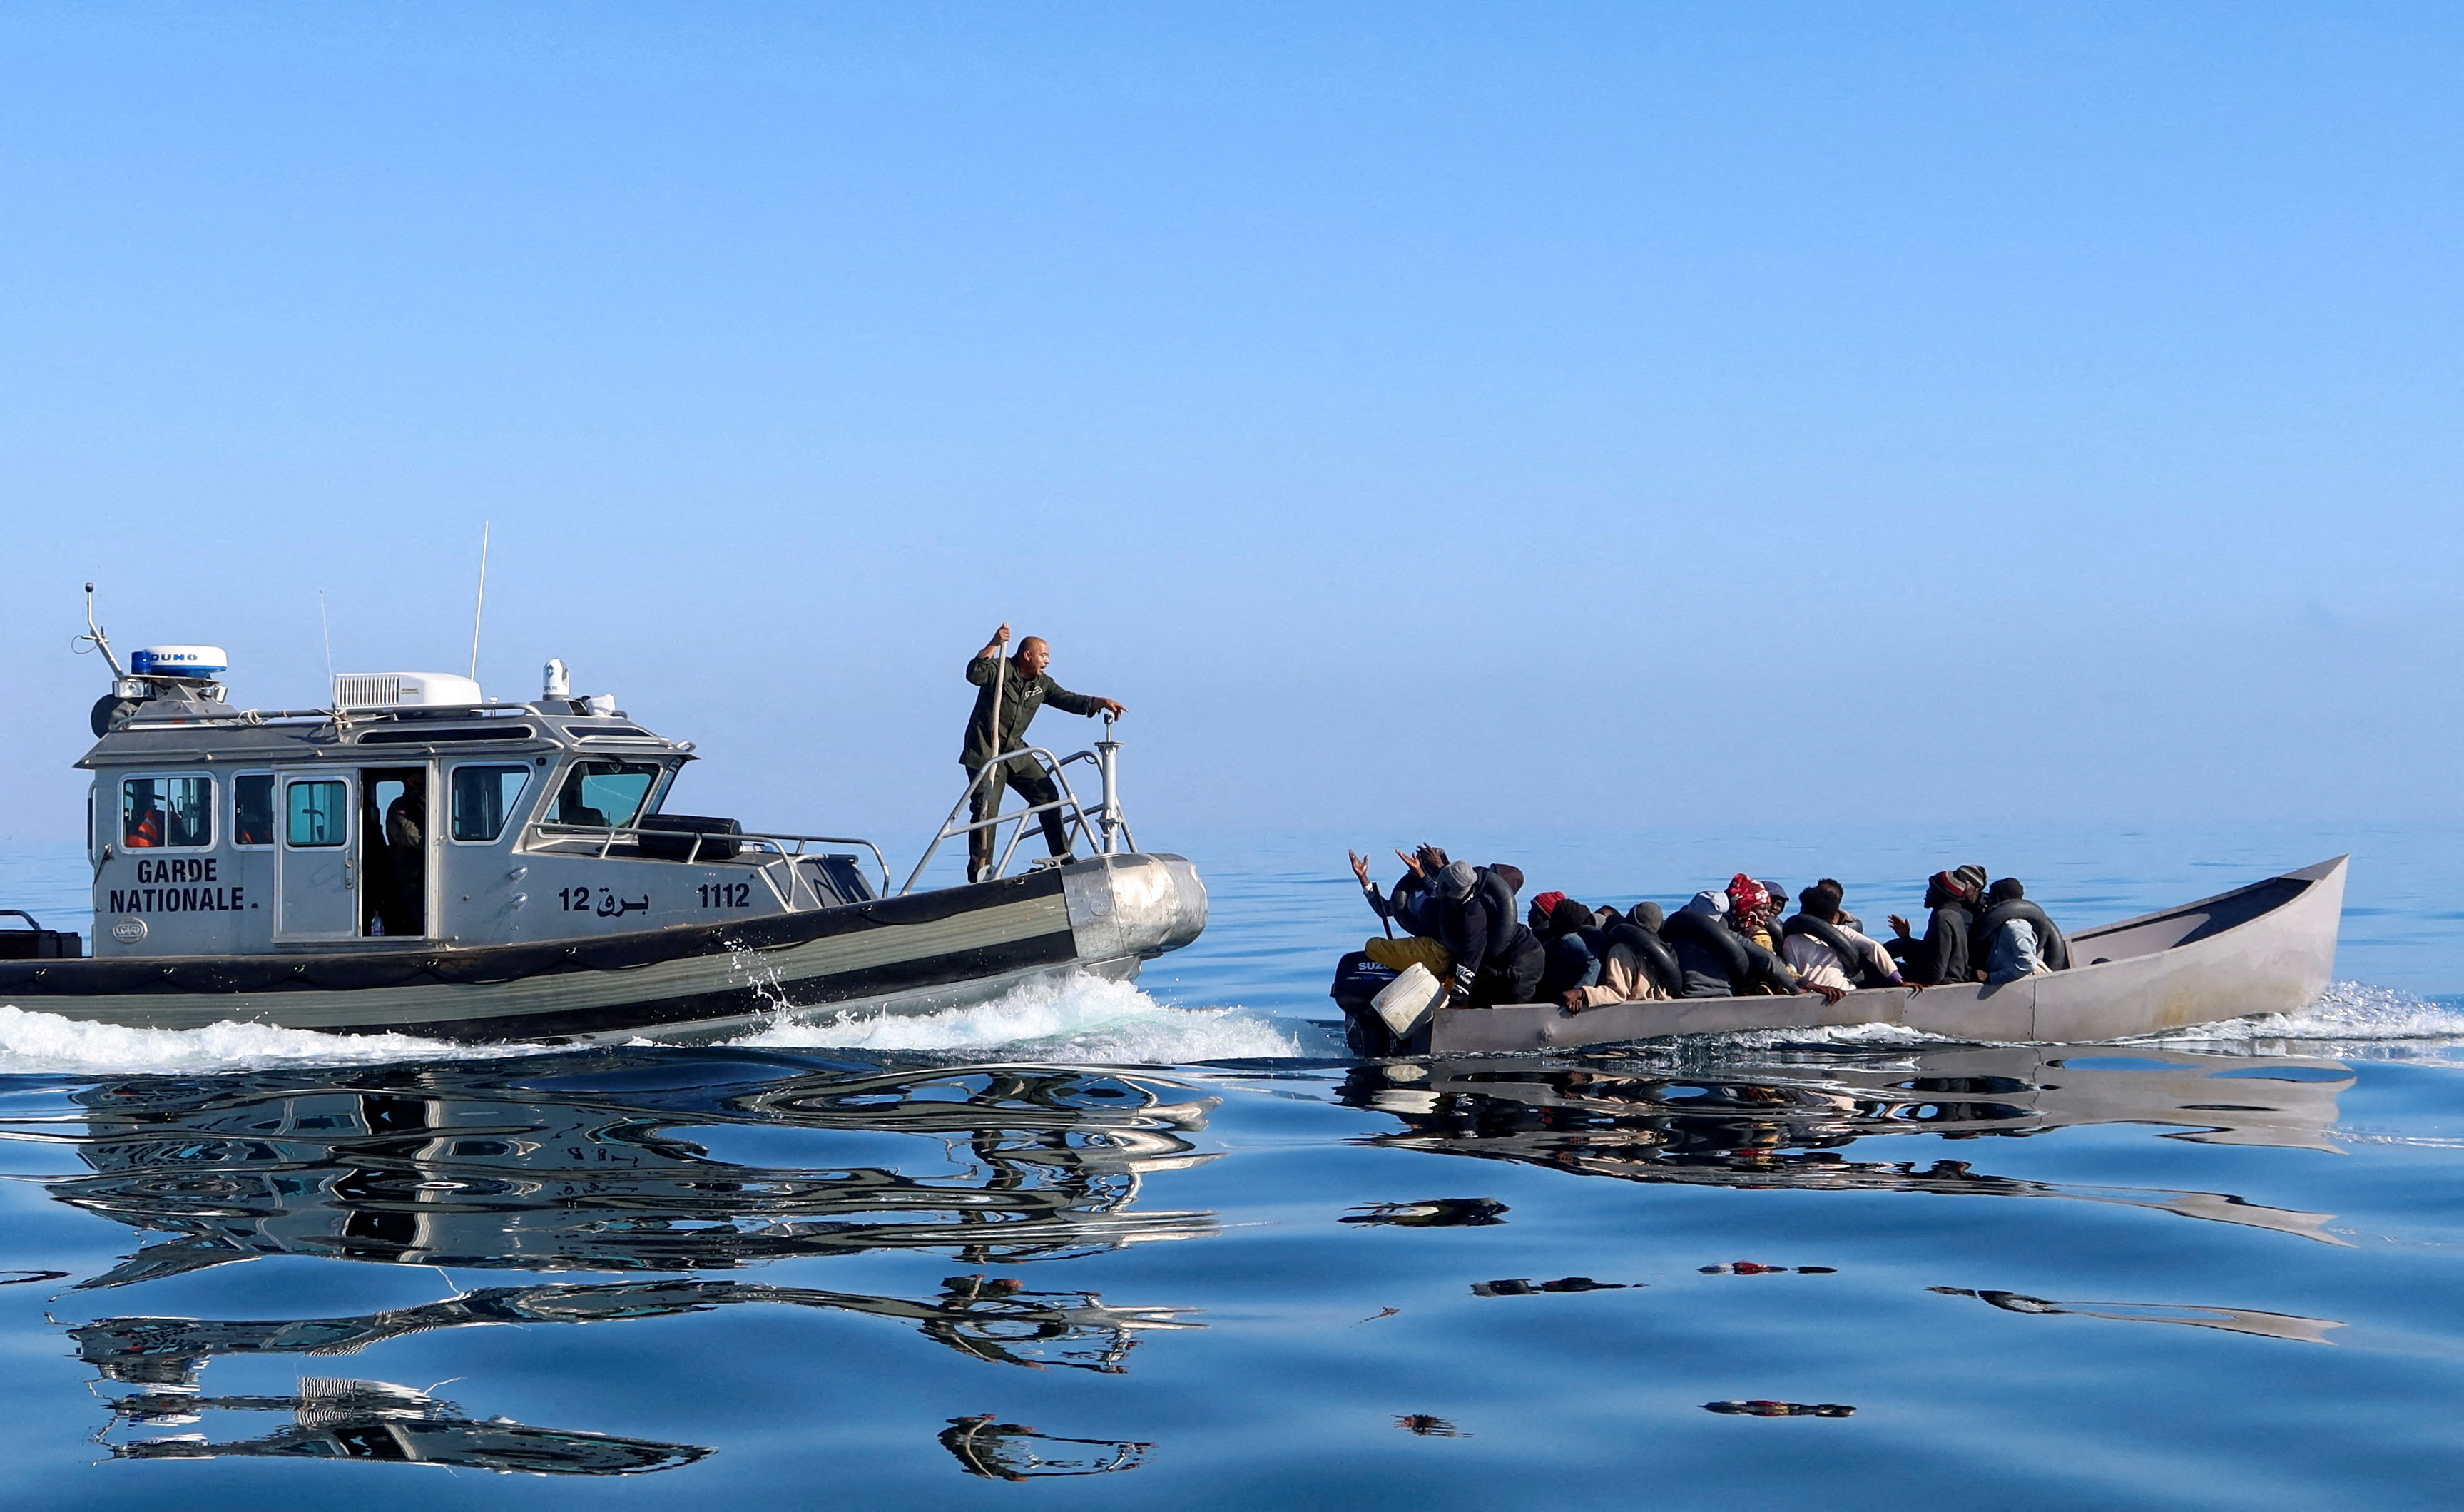 Guarda costeira da Tunísia detém migrantes no mar durante tentativa de cruzar para a Itália (REUTERS/Jihed Abidellaoui)